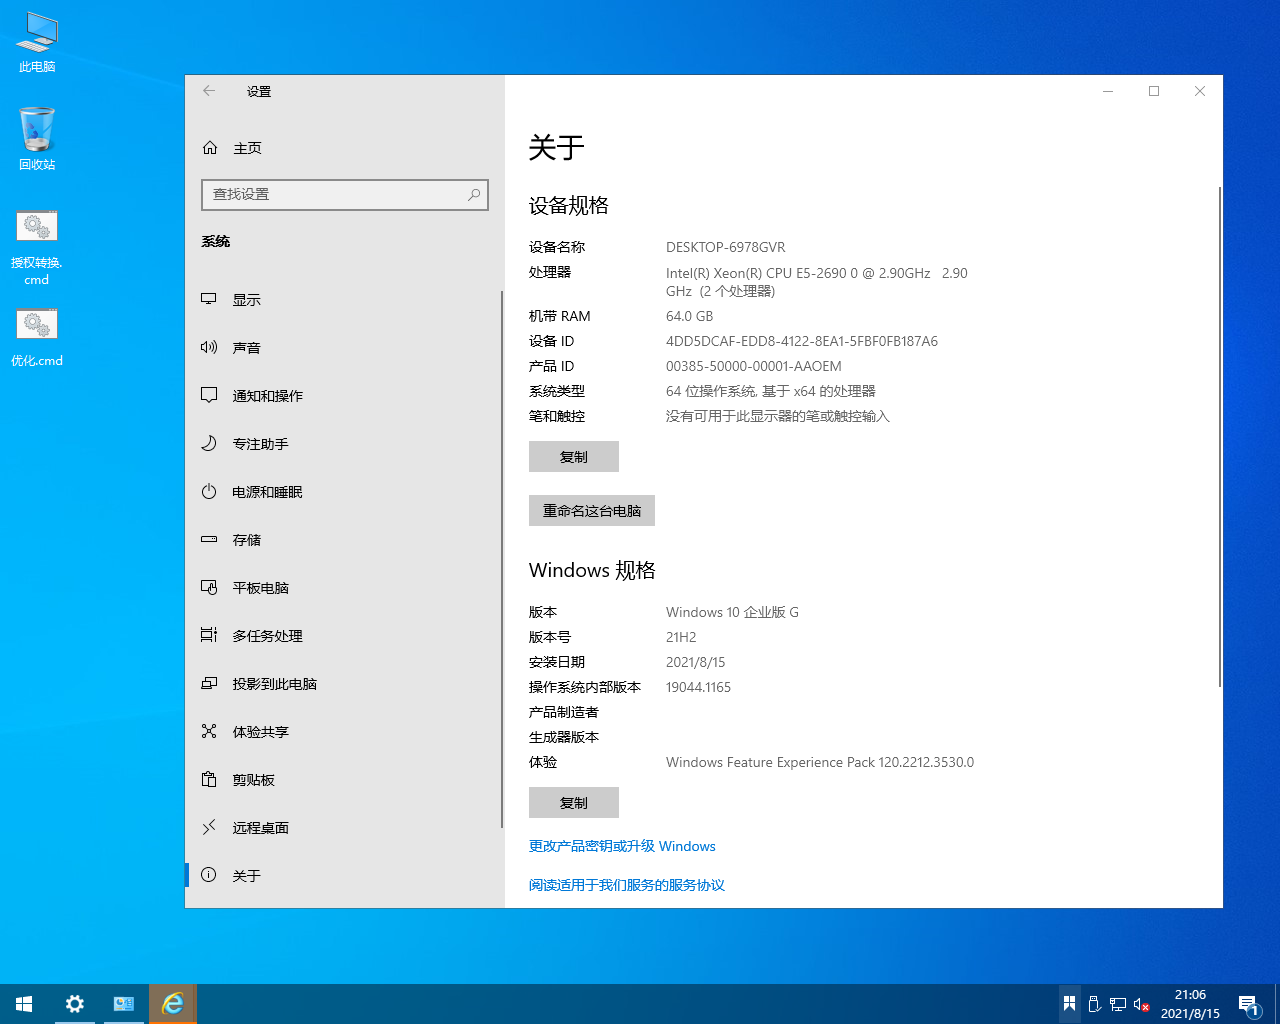 xb21cn Windows10企业版G 21H2-PK技术网